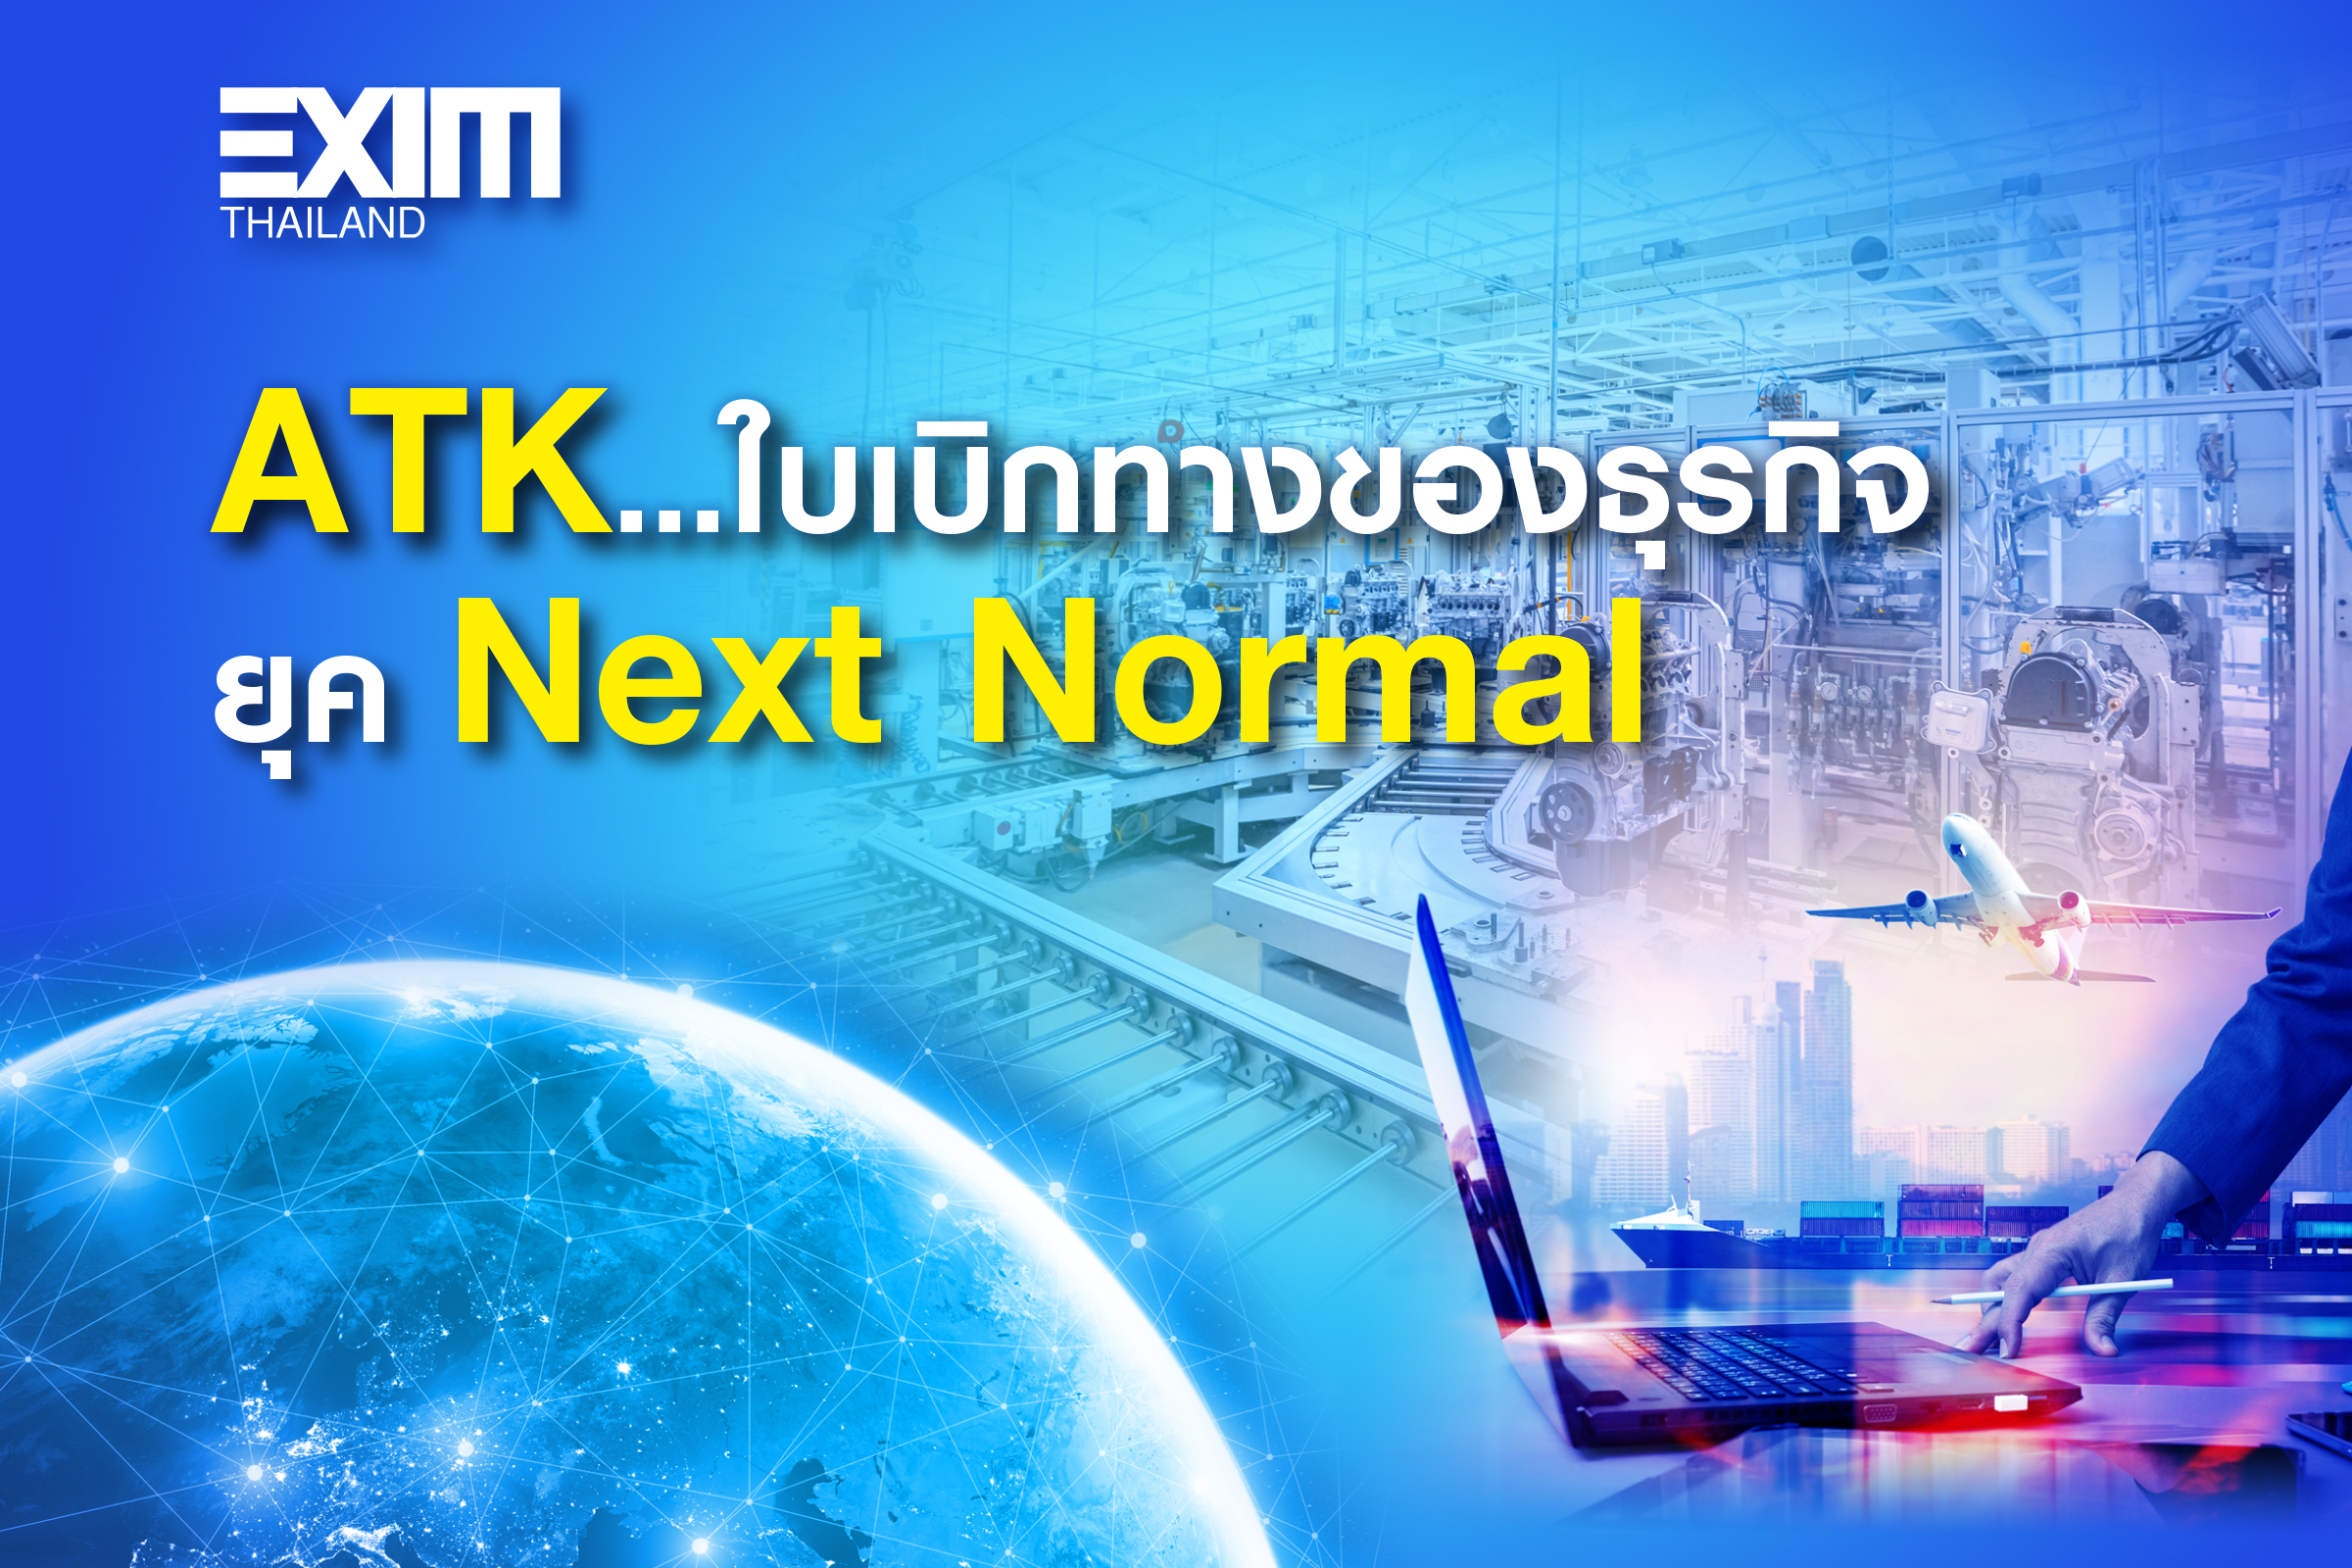 ATK…ใบเบิกทางของธุรกิจยุค Next Normal